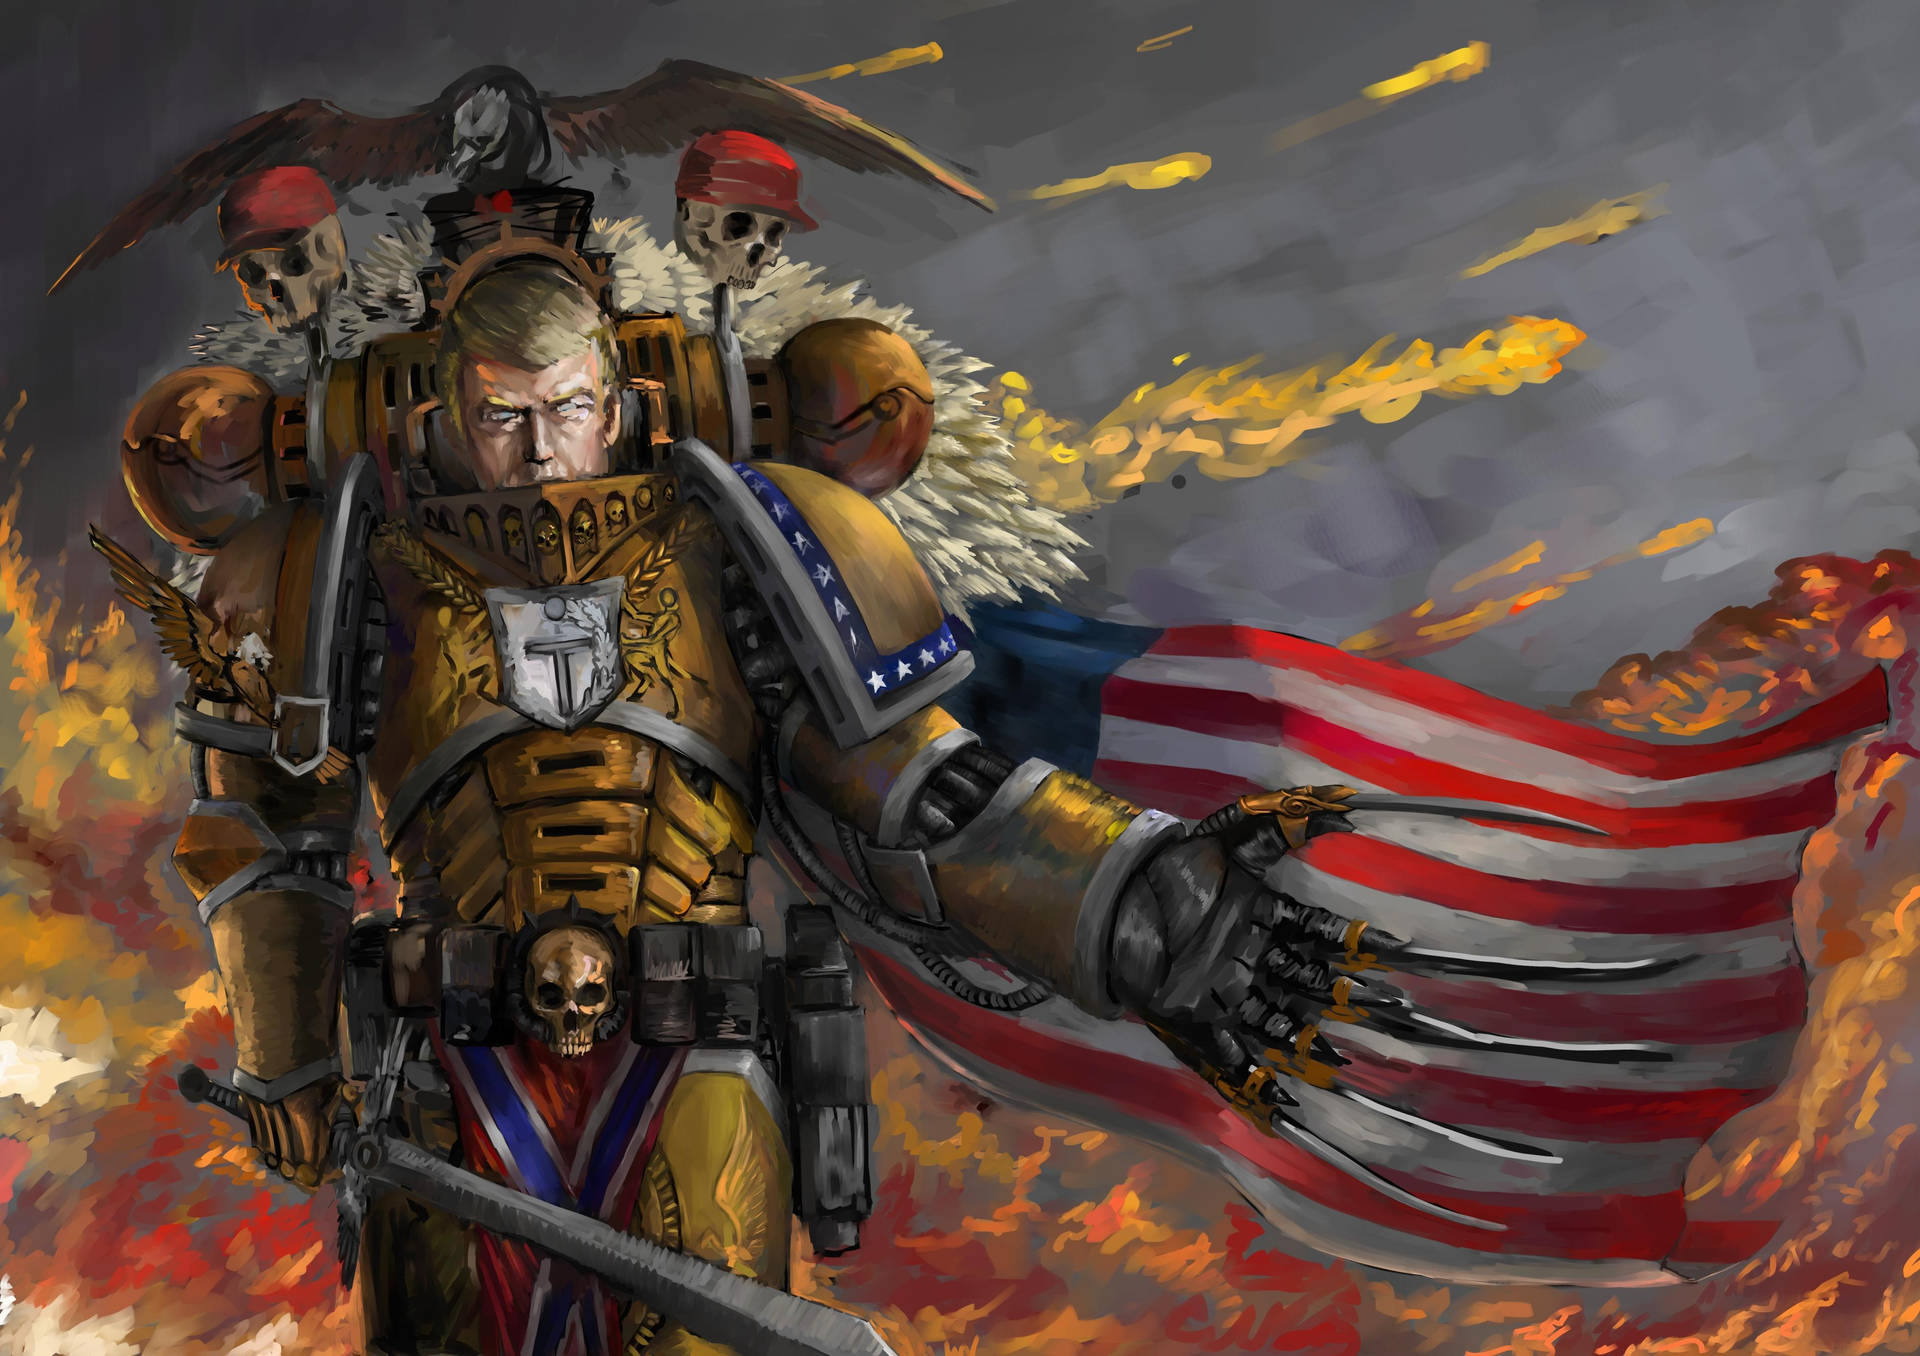 Fan art wallpaper of Donald Trump as epic US superhero